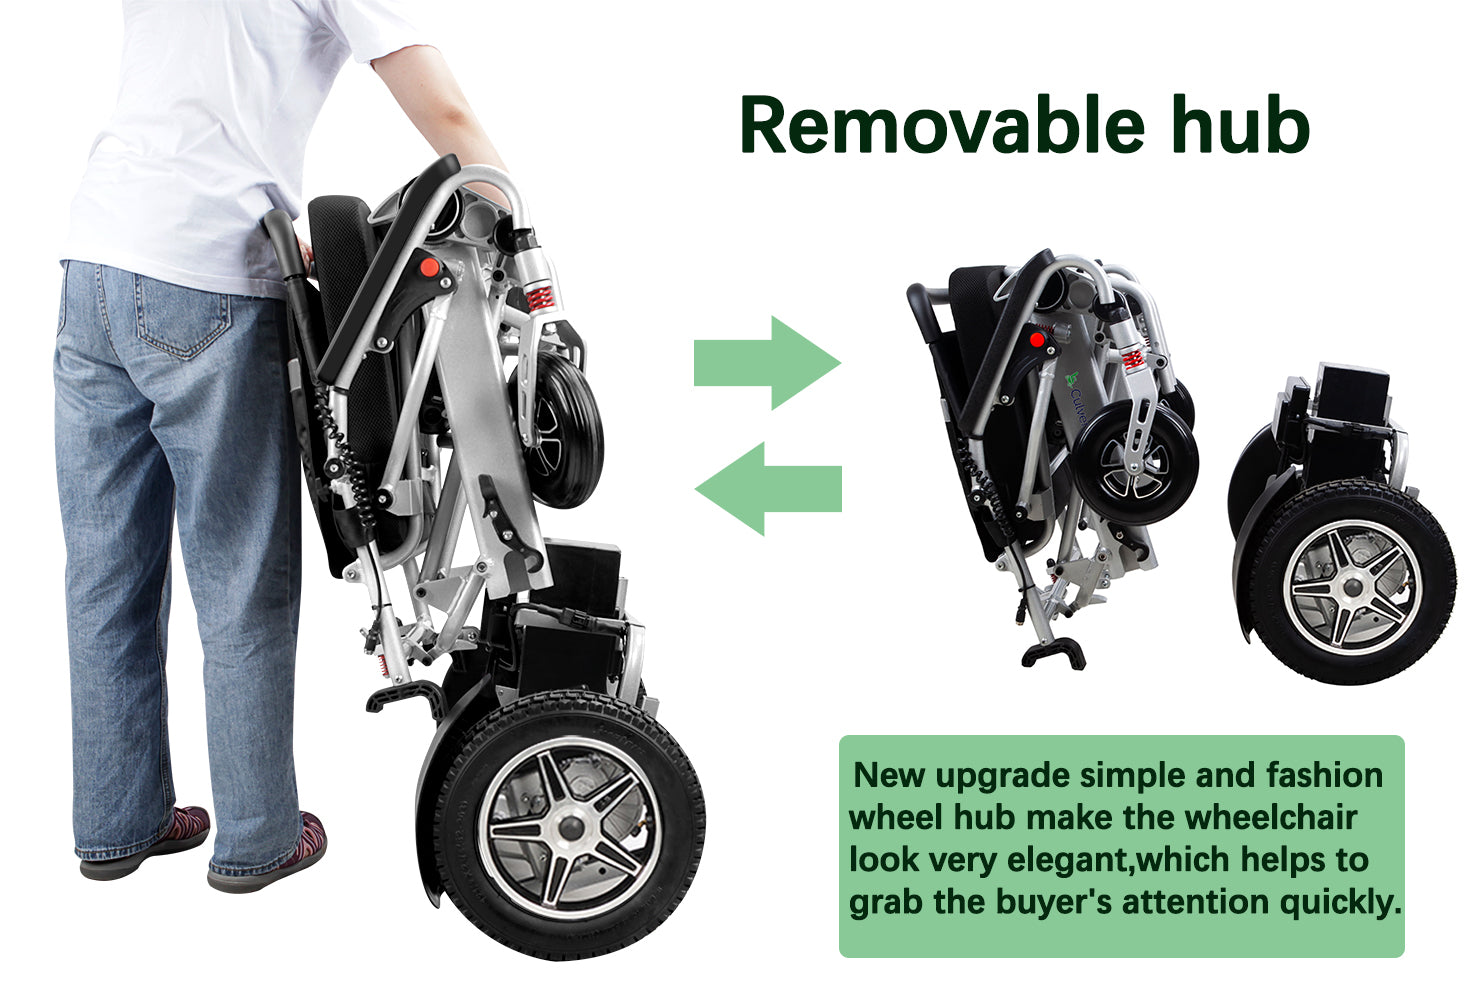 Folding Electric Wheelchair, 400 lb Capacity